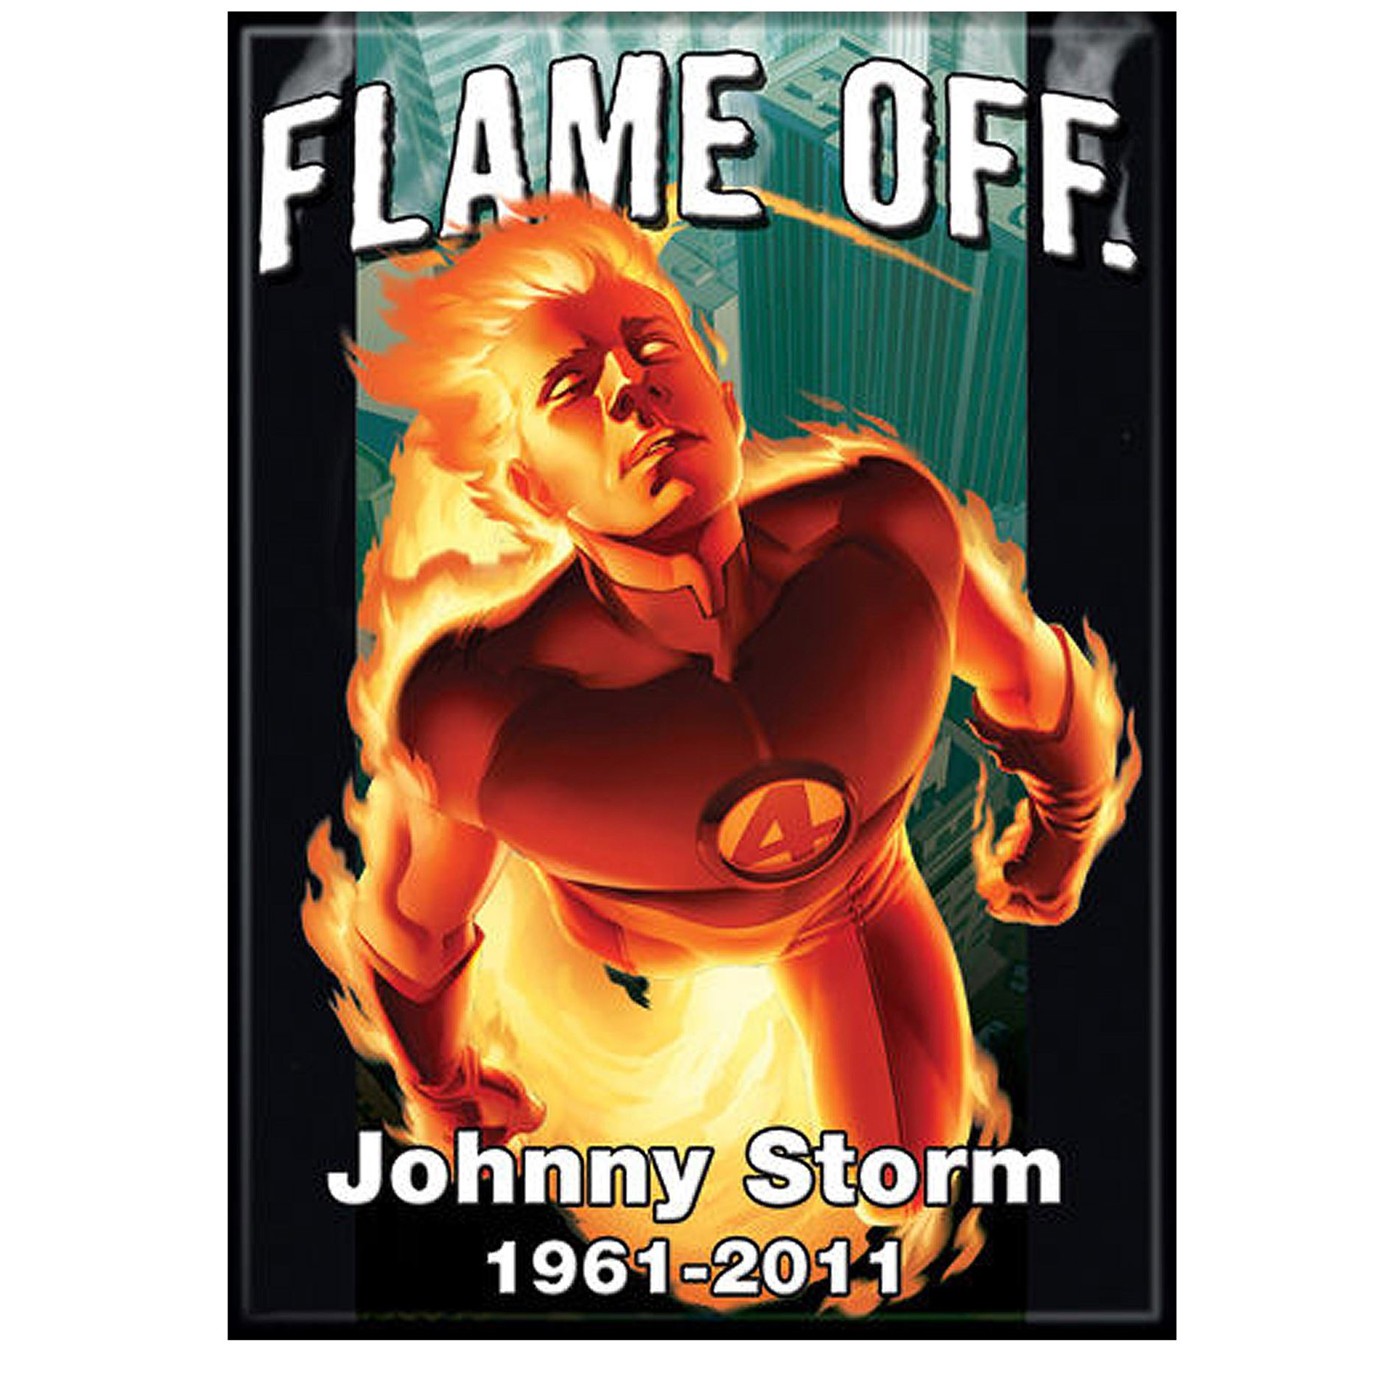 Johnny Storm Flame Off Magnet